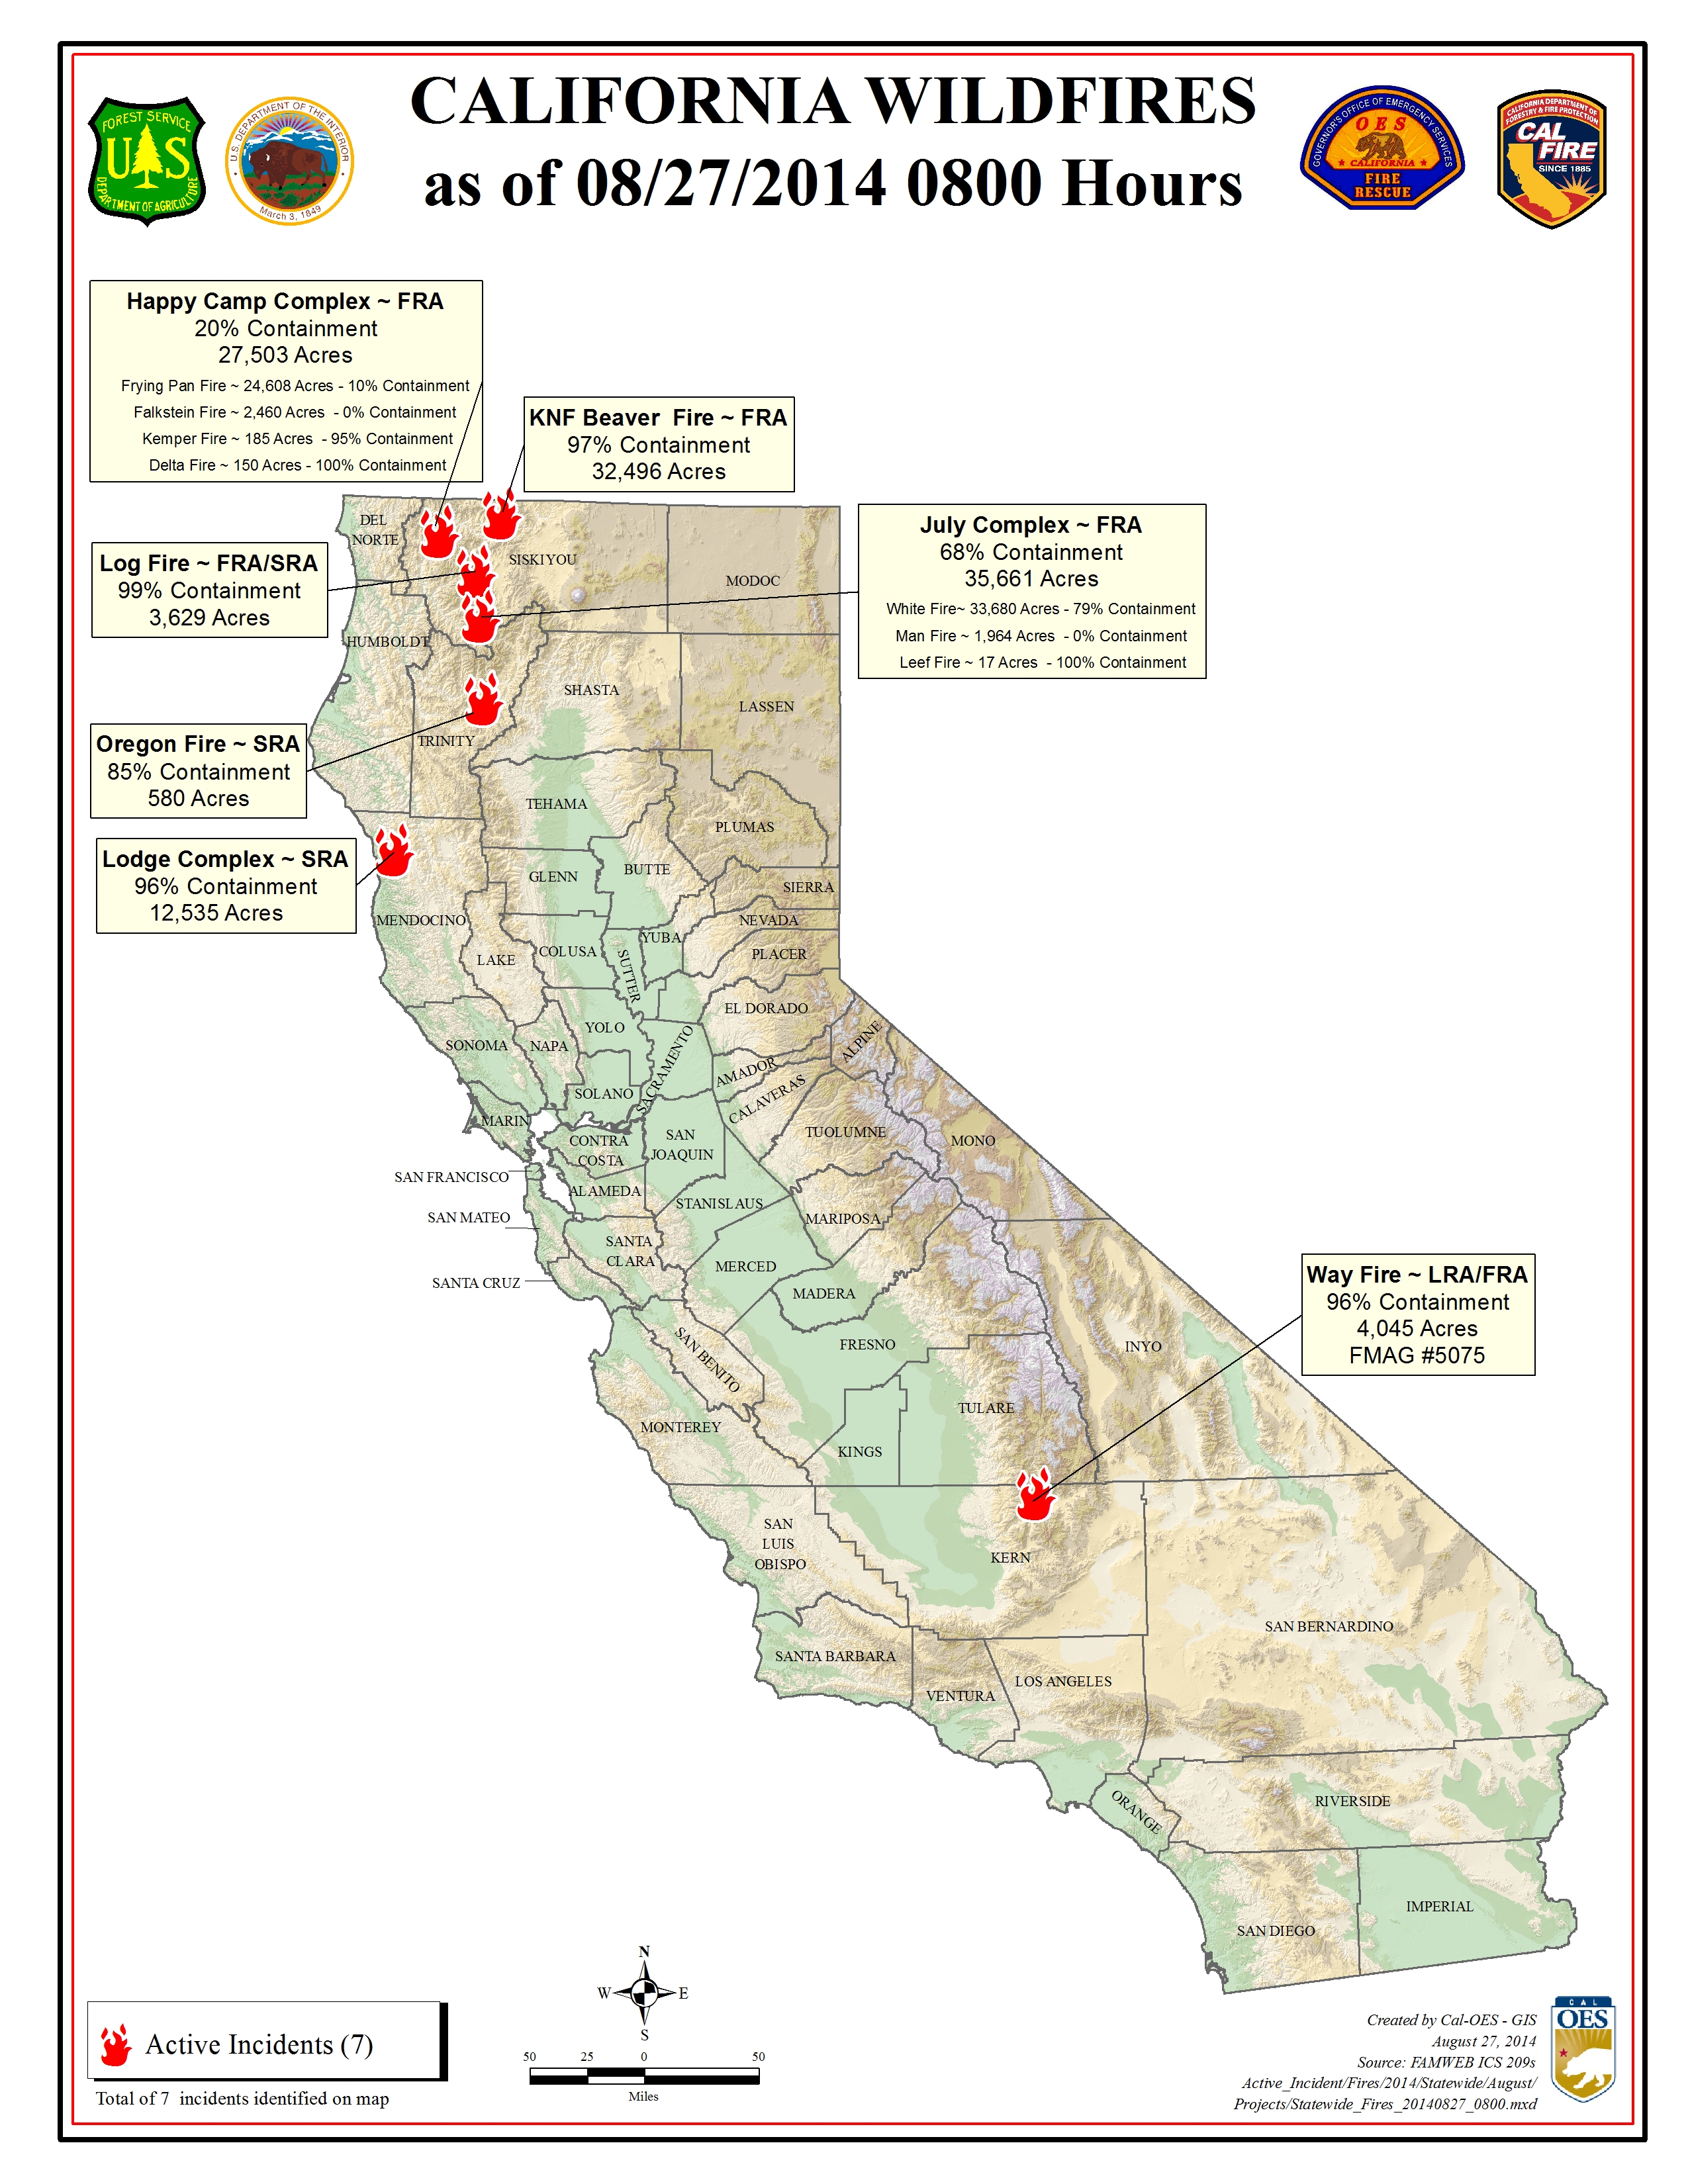 Wednesday: Northern California Fire Update | Jefferson Public Radio